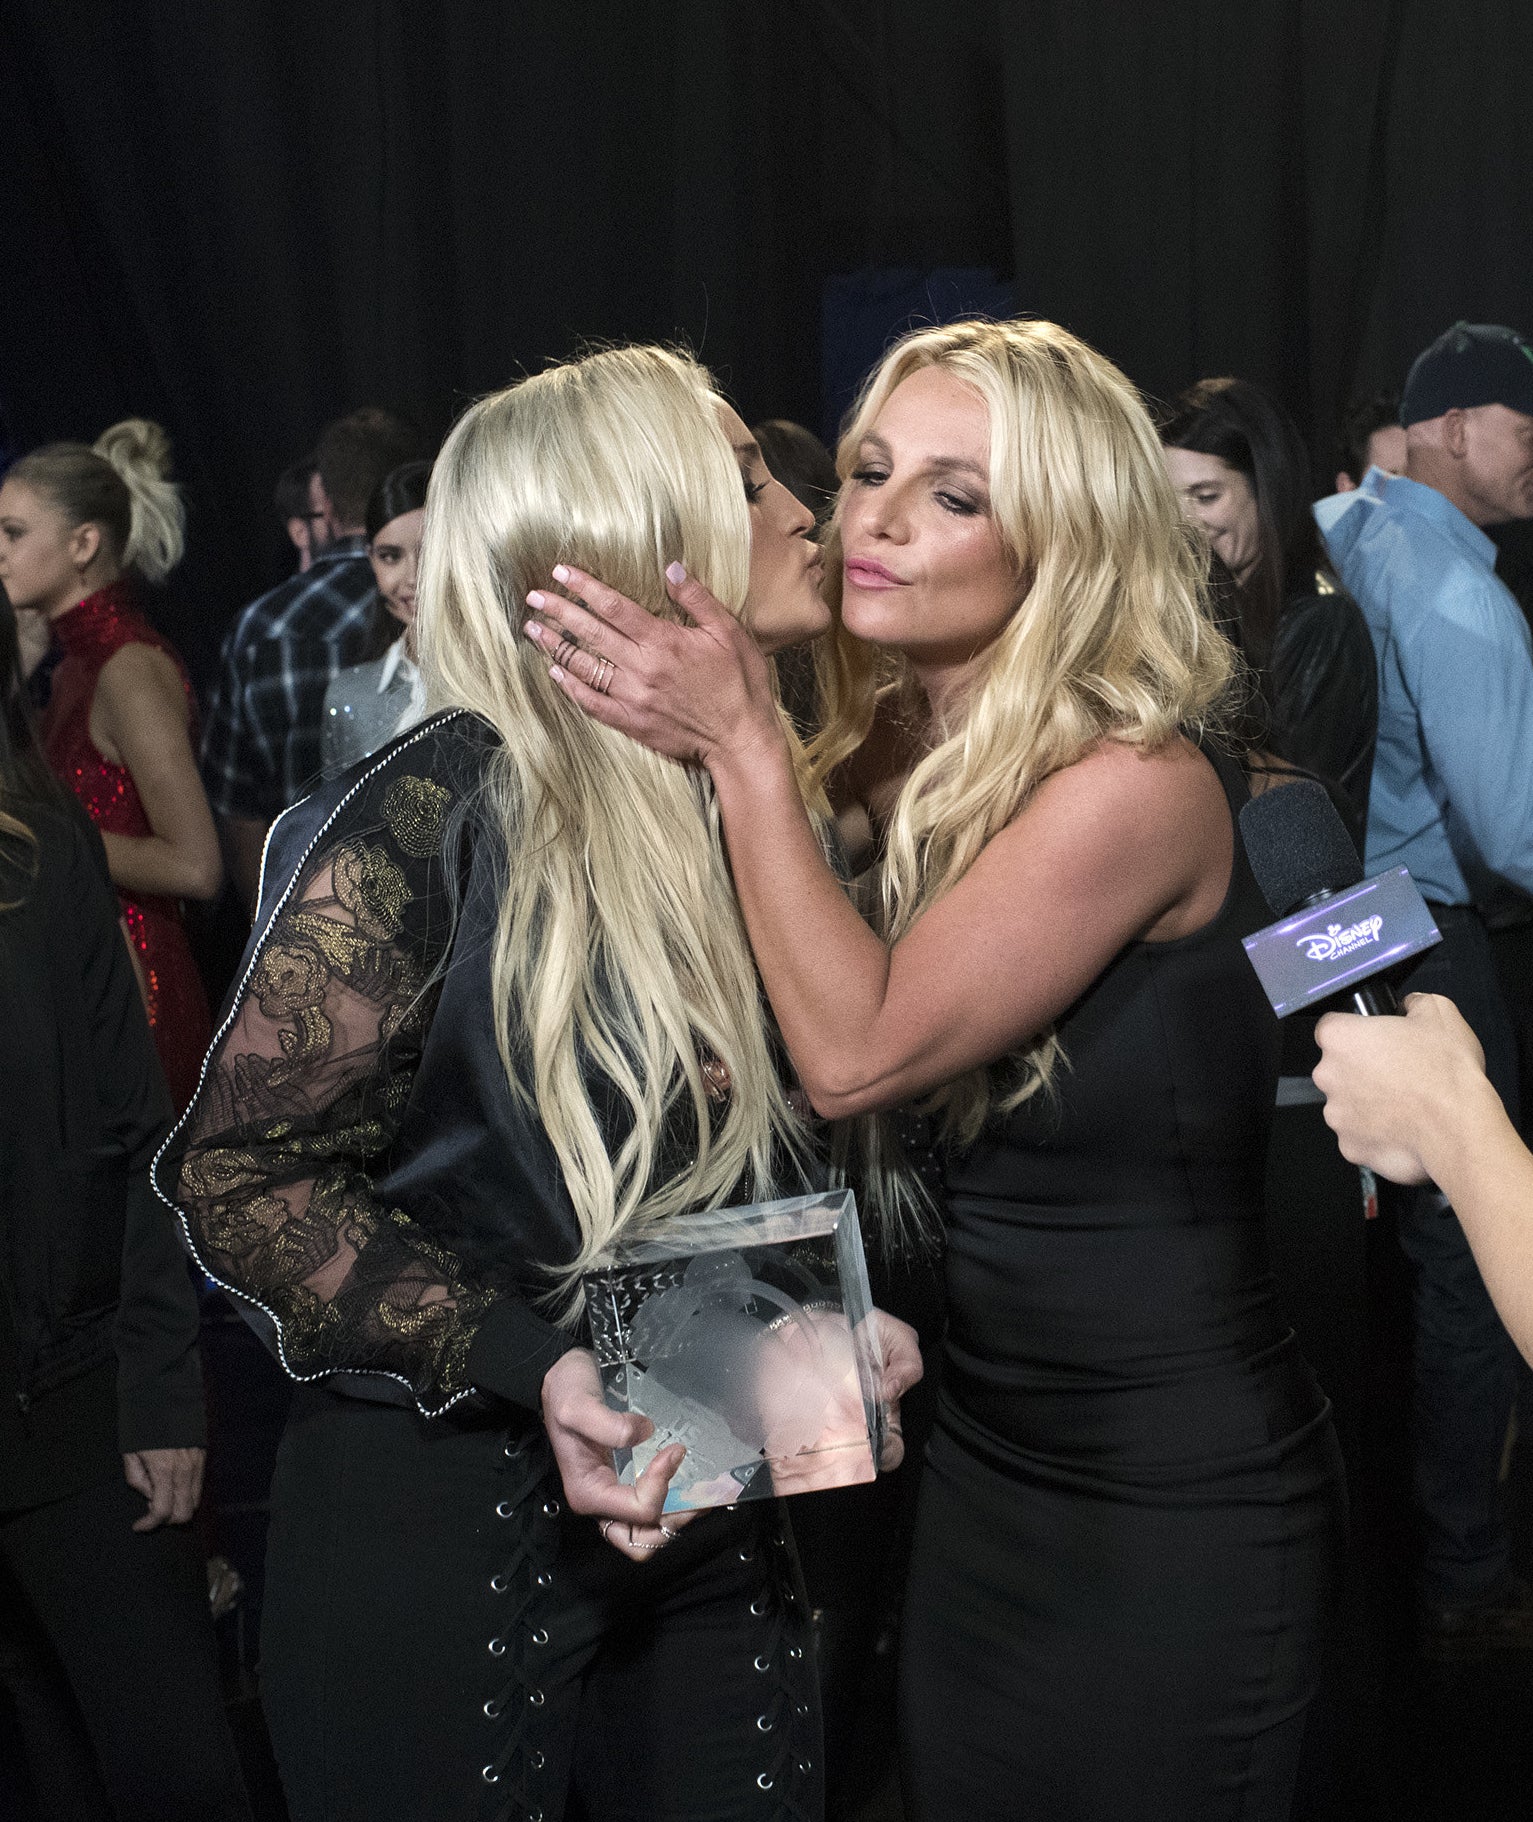 Jamie Lynn and Britney embracing